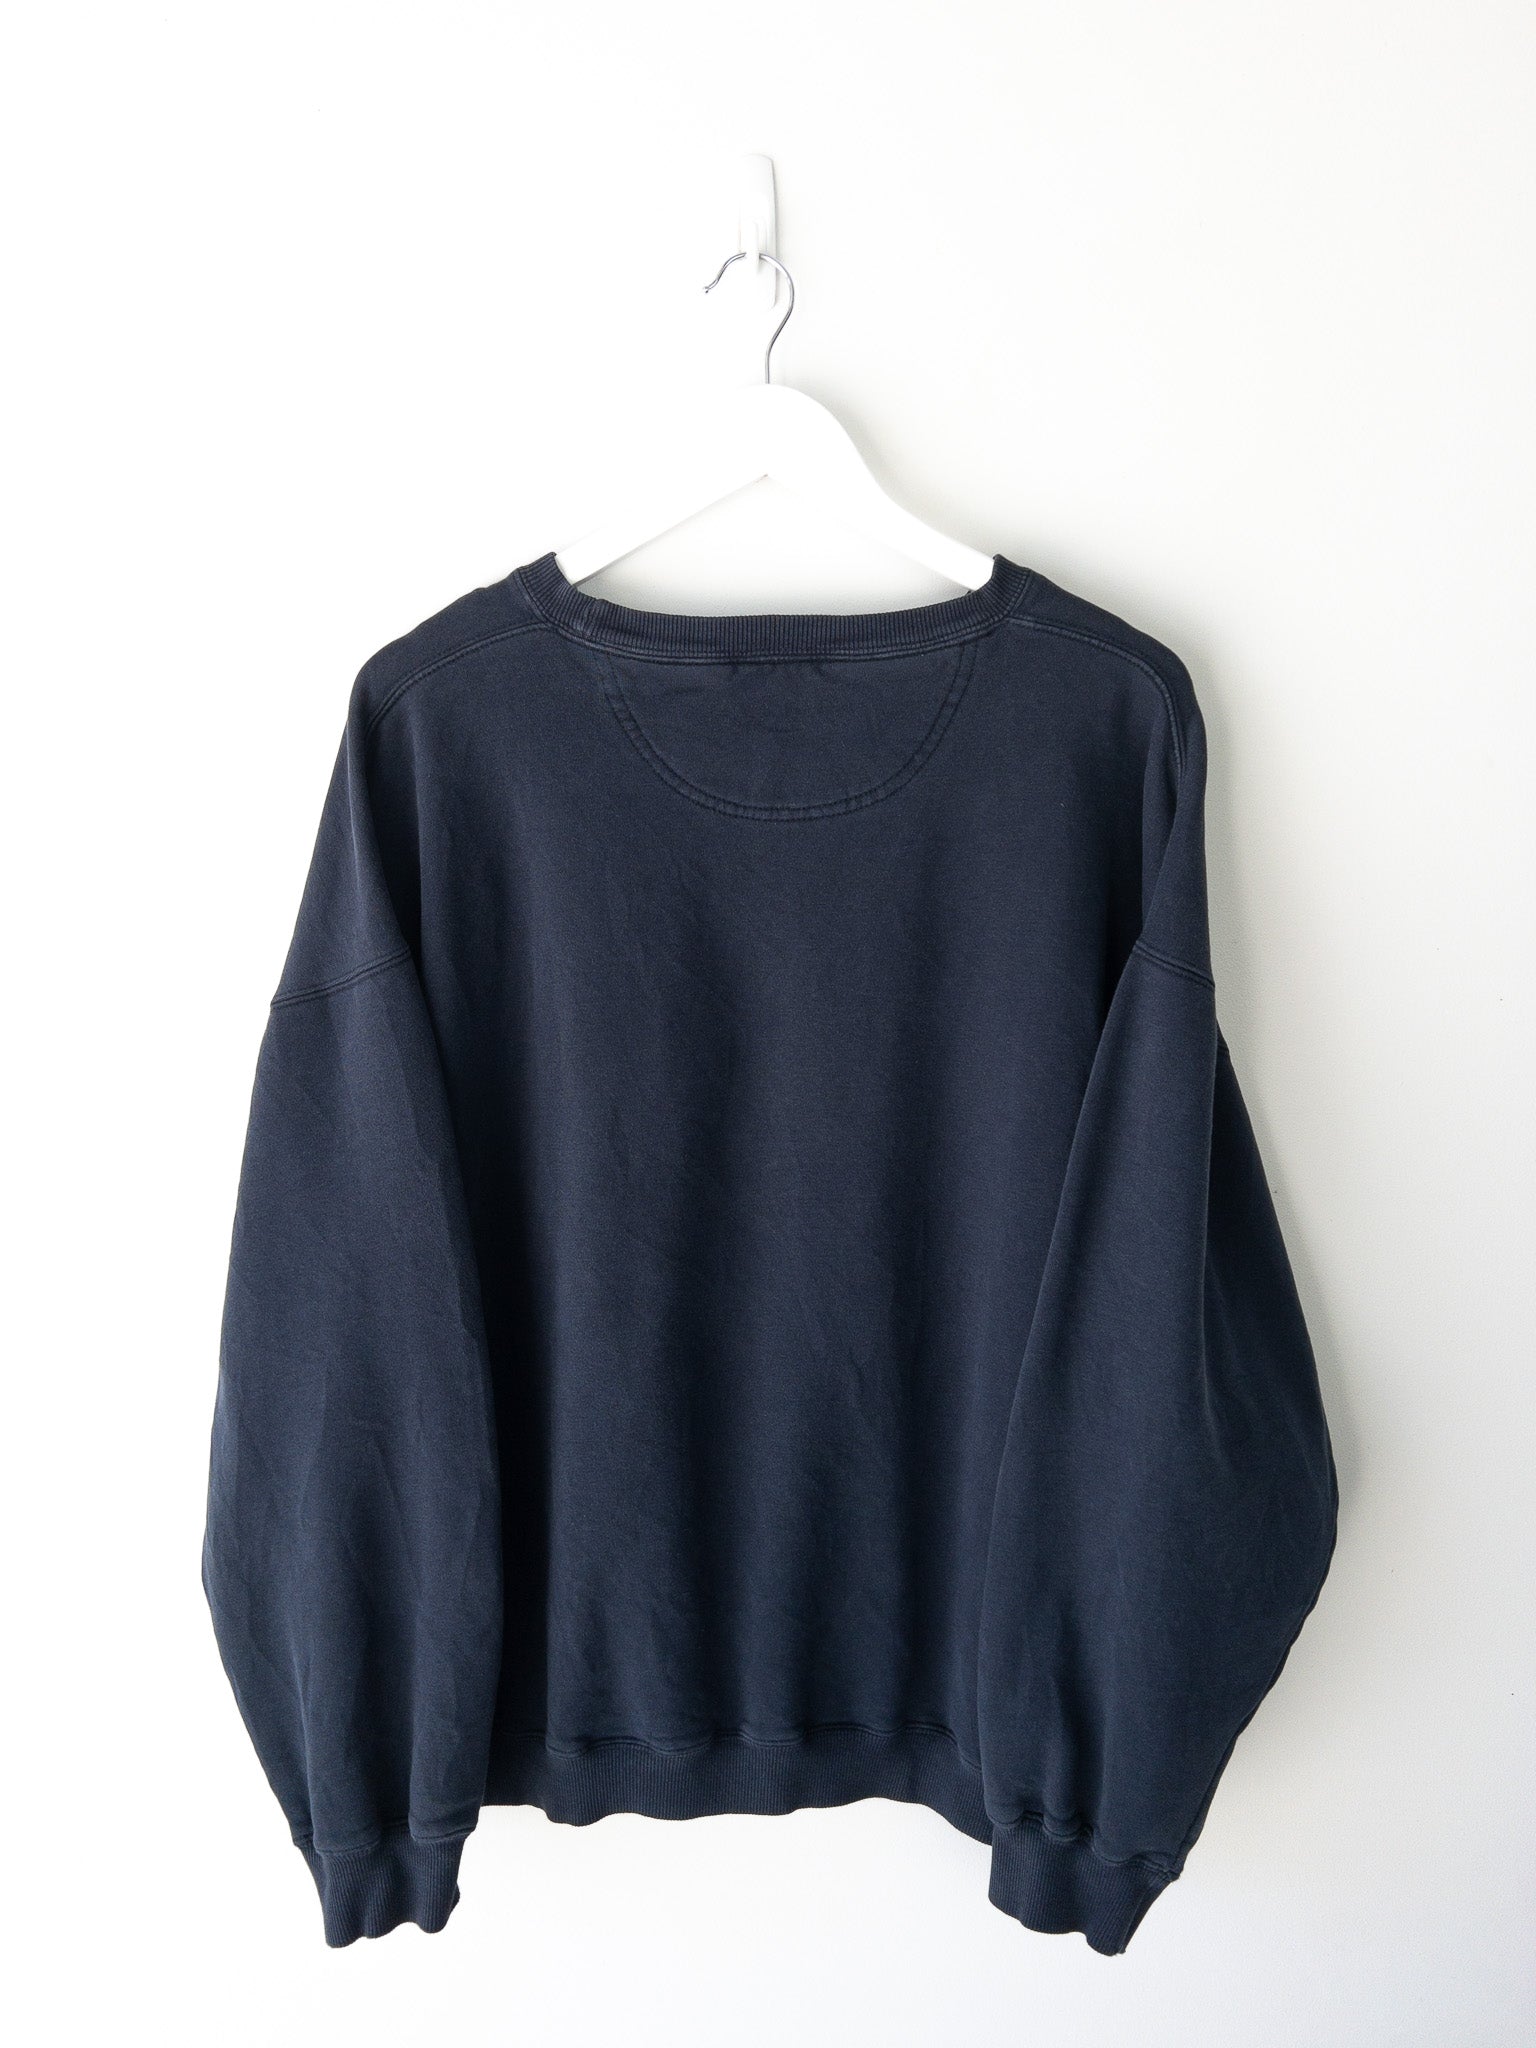 Vintage 'Get 'Er Done! Tomorrow' Sweatshirt (XL)